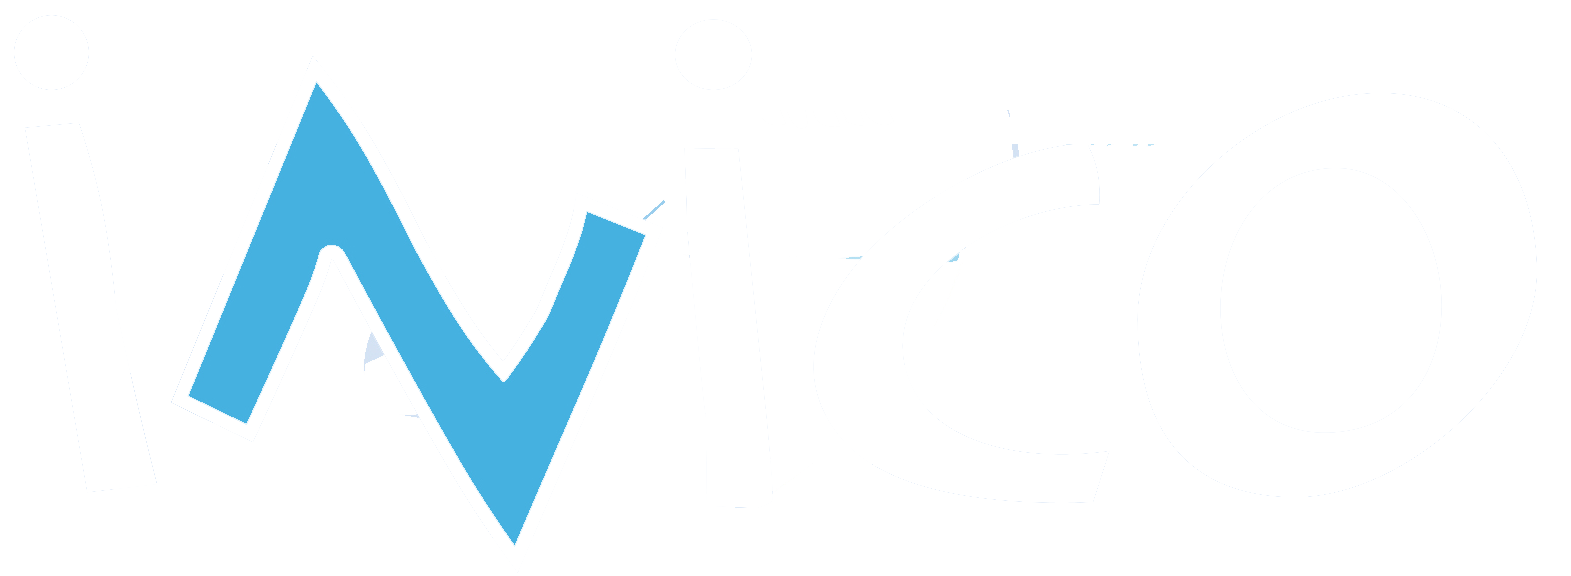 Logotipo del INICO